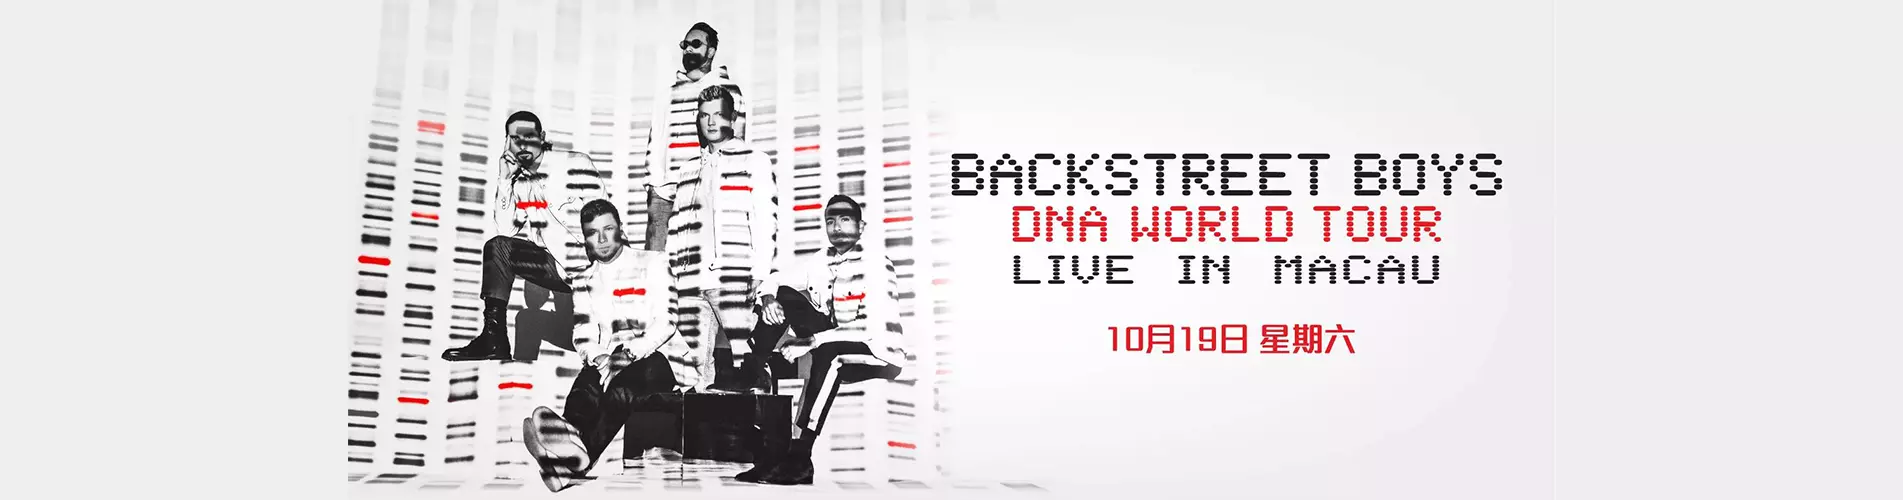 Backstreet Boys DNA 世界巡迴演唱會 - 澳門站